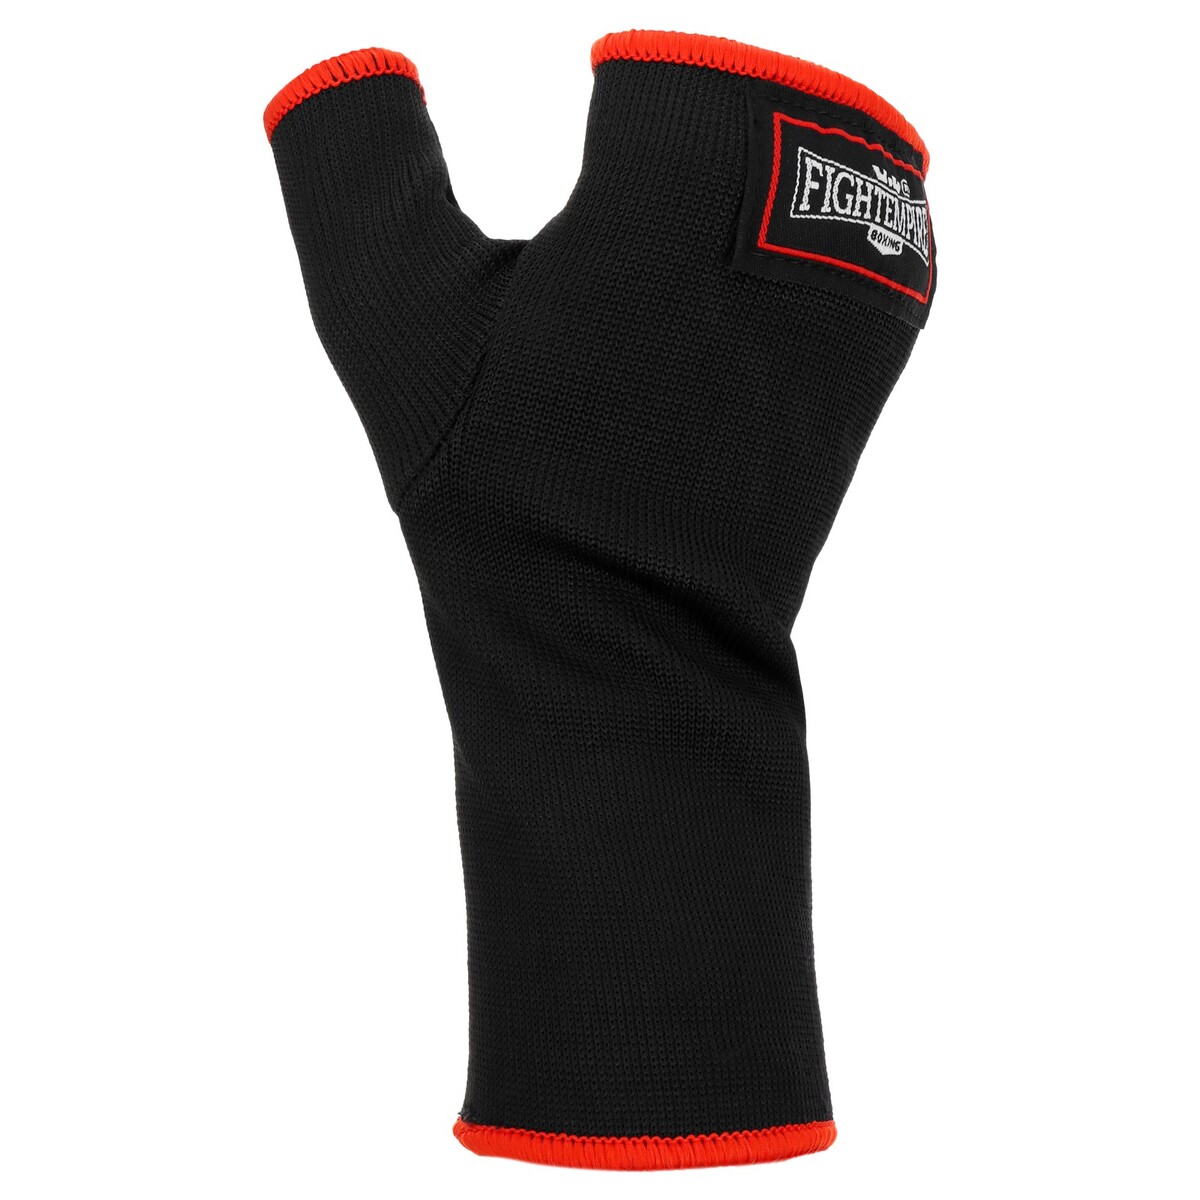 Внутренние перчатки fight empire, inner gloves oxford велоперчатки oxford coolmax gloves ростовка l xl